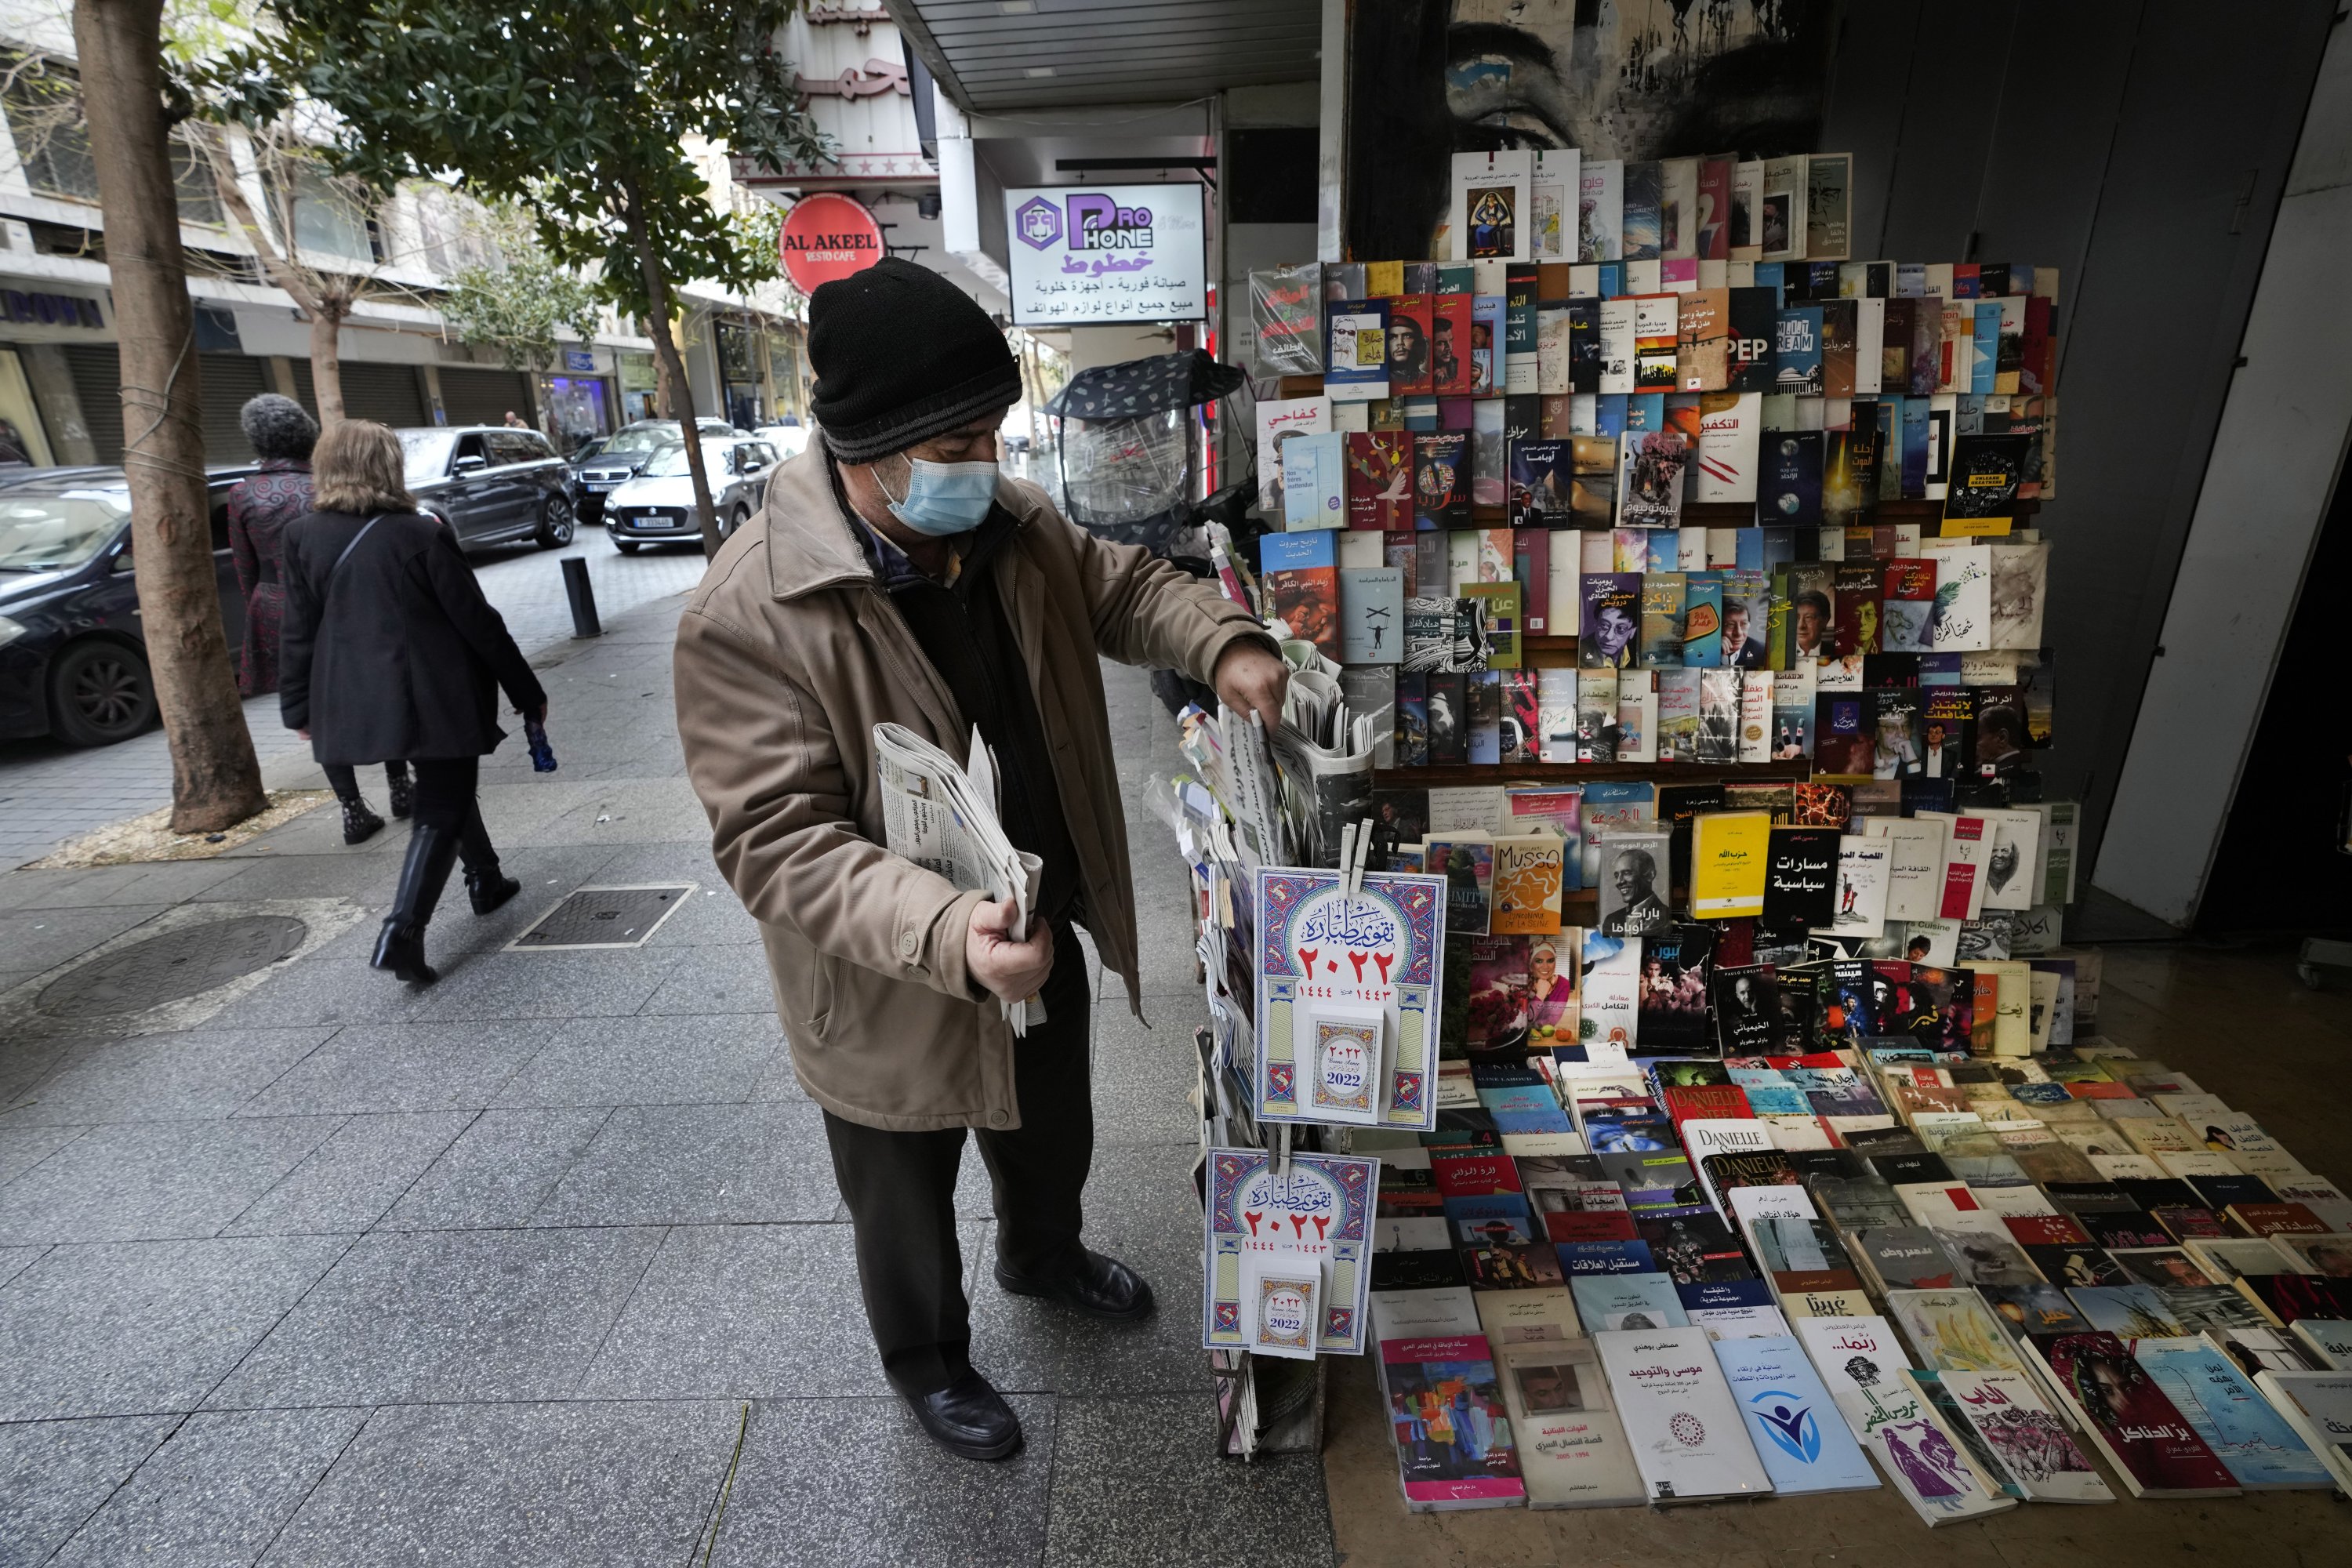 Naim Saleh, a newspapers, magazines and books street vendor, displays newspapers at Hamra street, in Beirut, Lebanon, Jan. 14, 2022. (AP Photo)